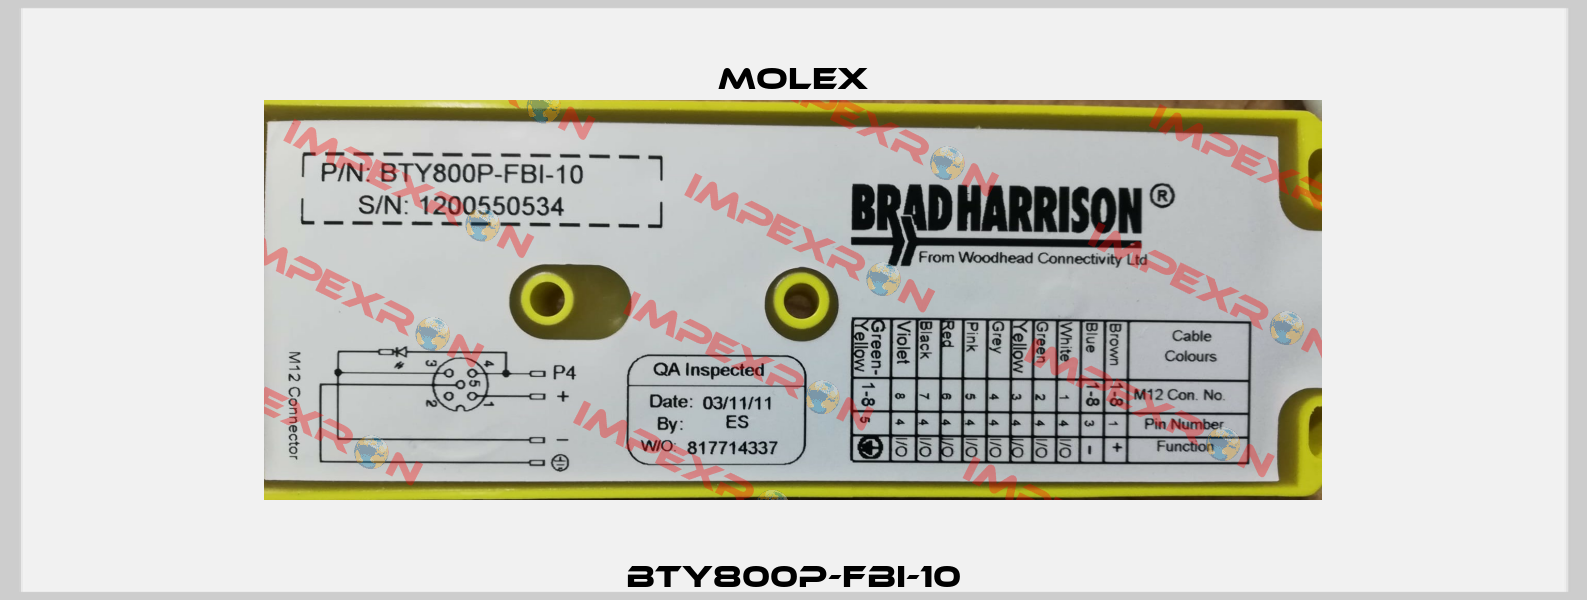 BTY800P-FBI-10 Molex